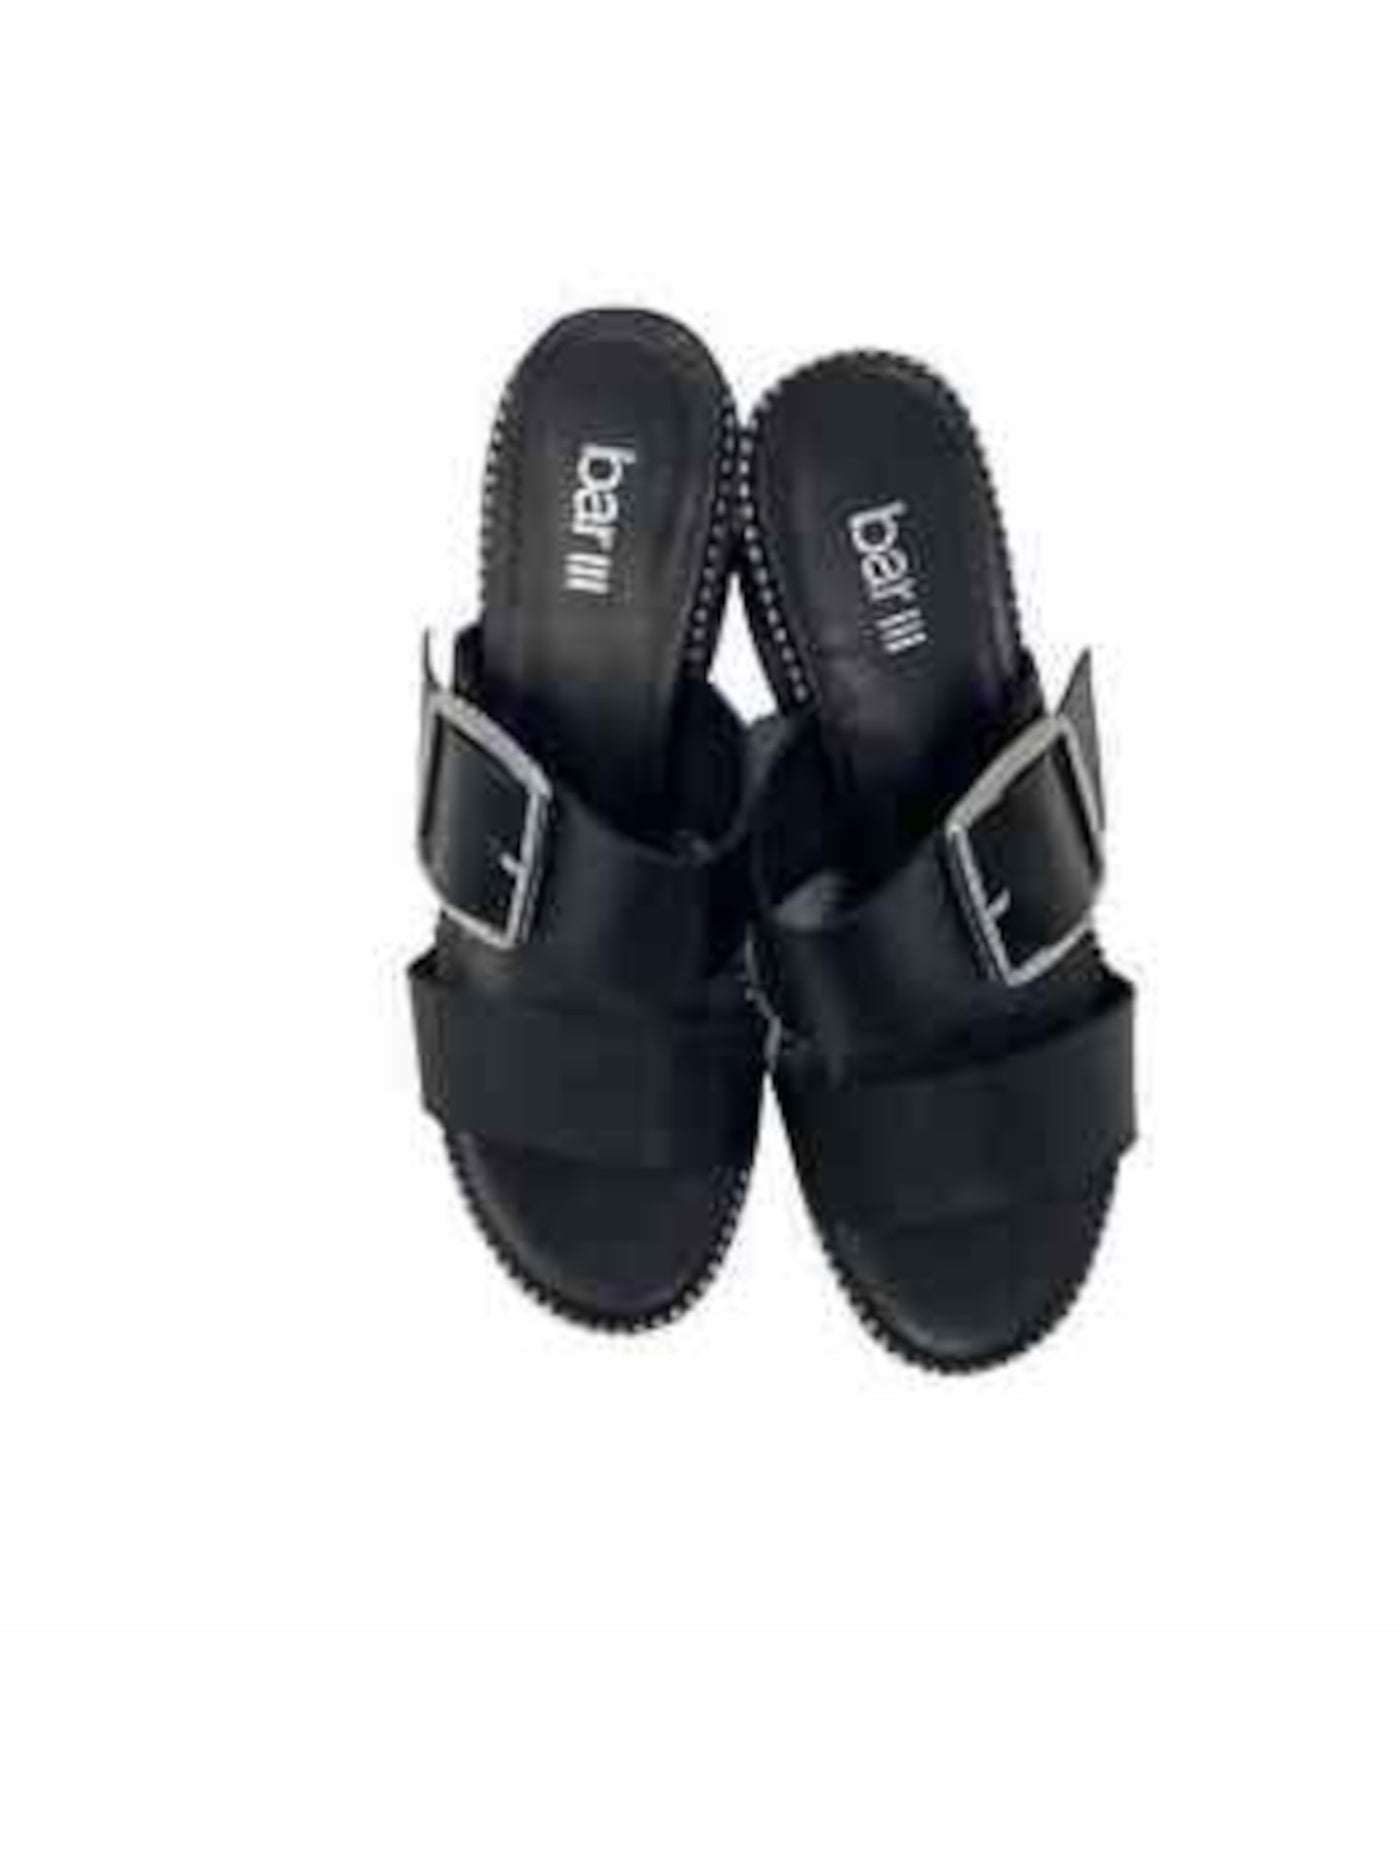 BAR III Womens Black Ball Chain Trim Padded Reena Almond Toe Block Heel Buckle Sandals Shoes 9 M